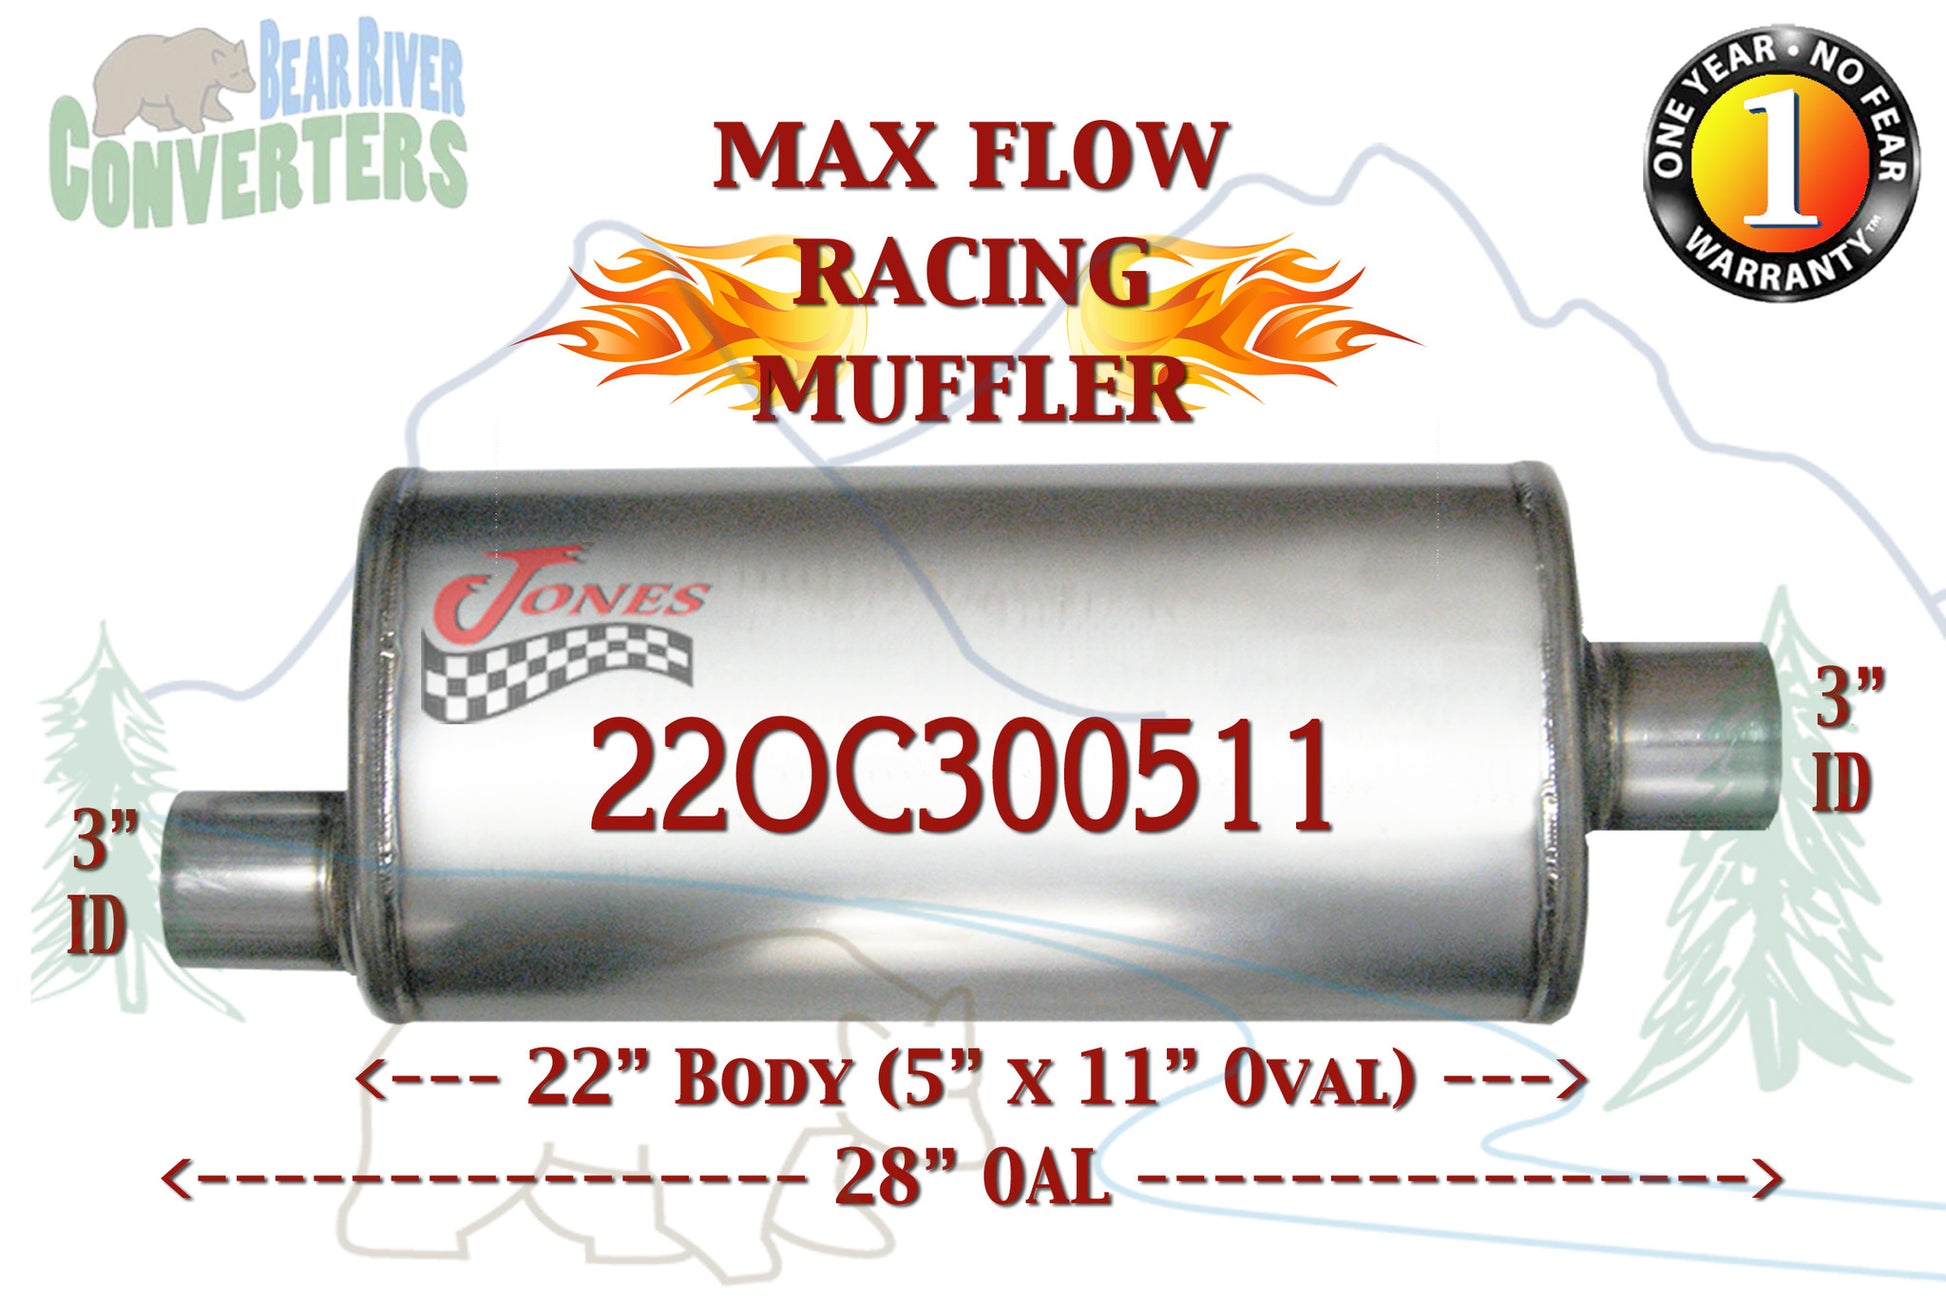 22OC300511 Jones MF2589 Max Flow Racing Muffler 22” Oval Body 3” Pipe Offset/Center 28” OAL - Bear River Converters